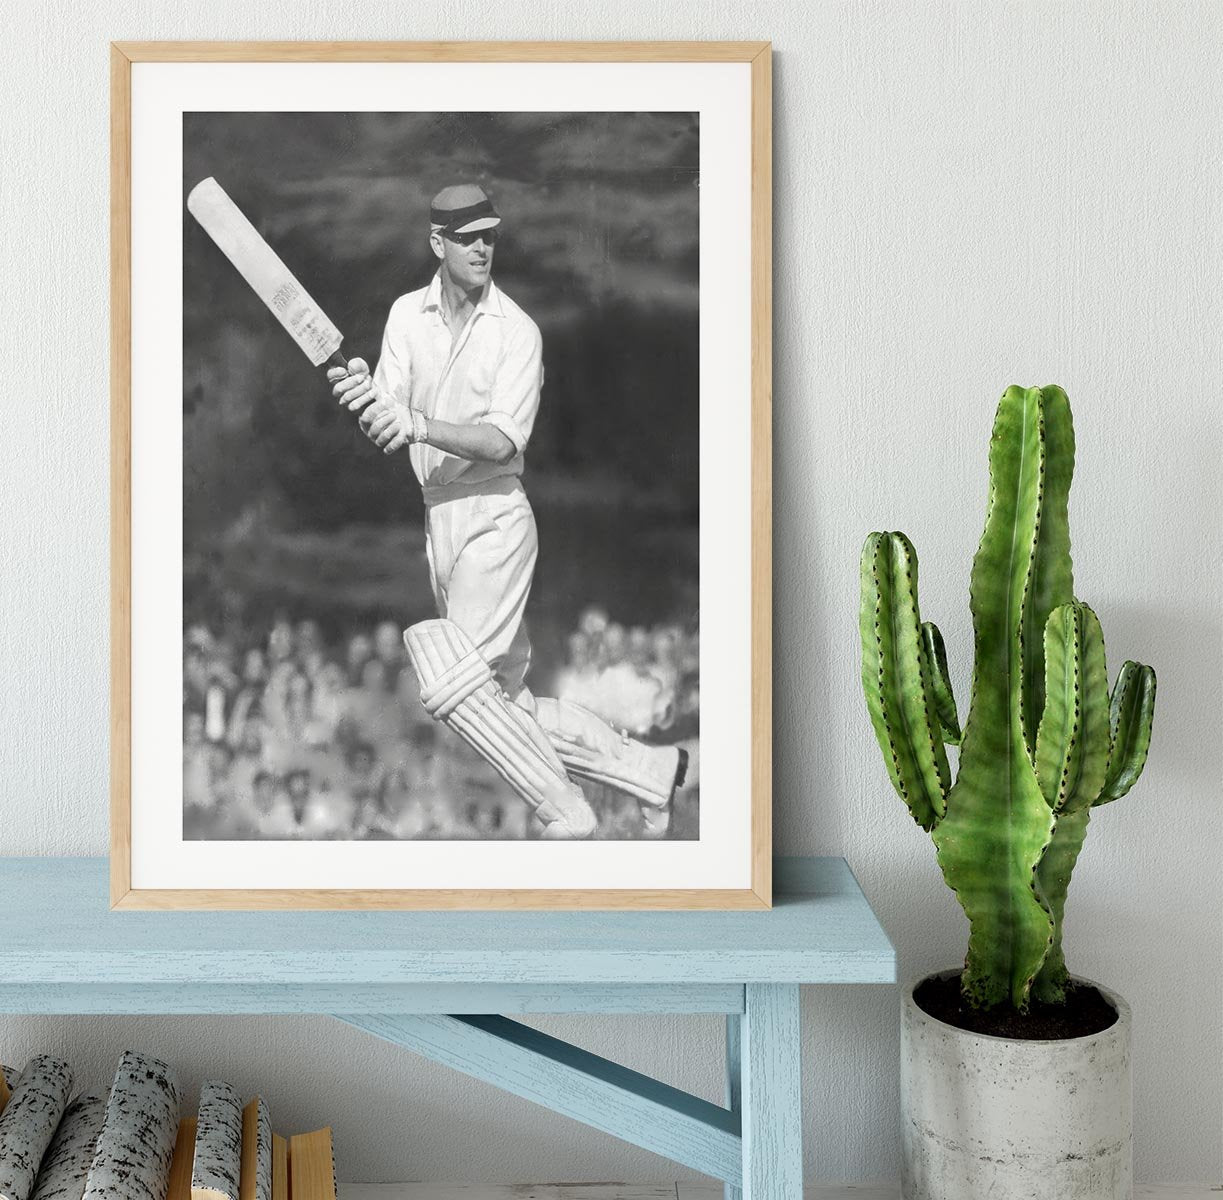 Prince Philip batting at a charity cricket match Framed Print - Canvas Art Rocks - 3